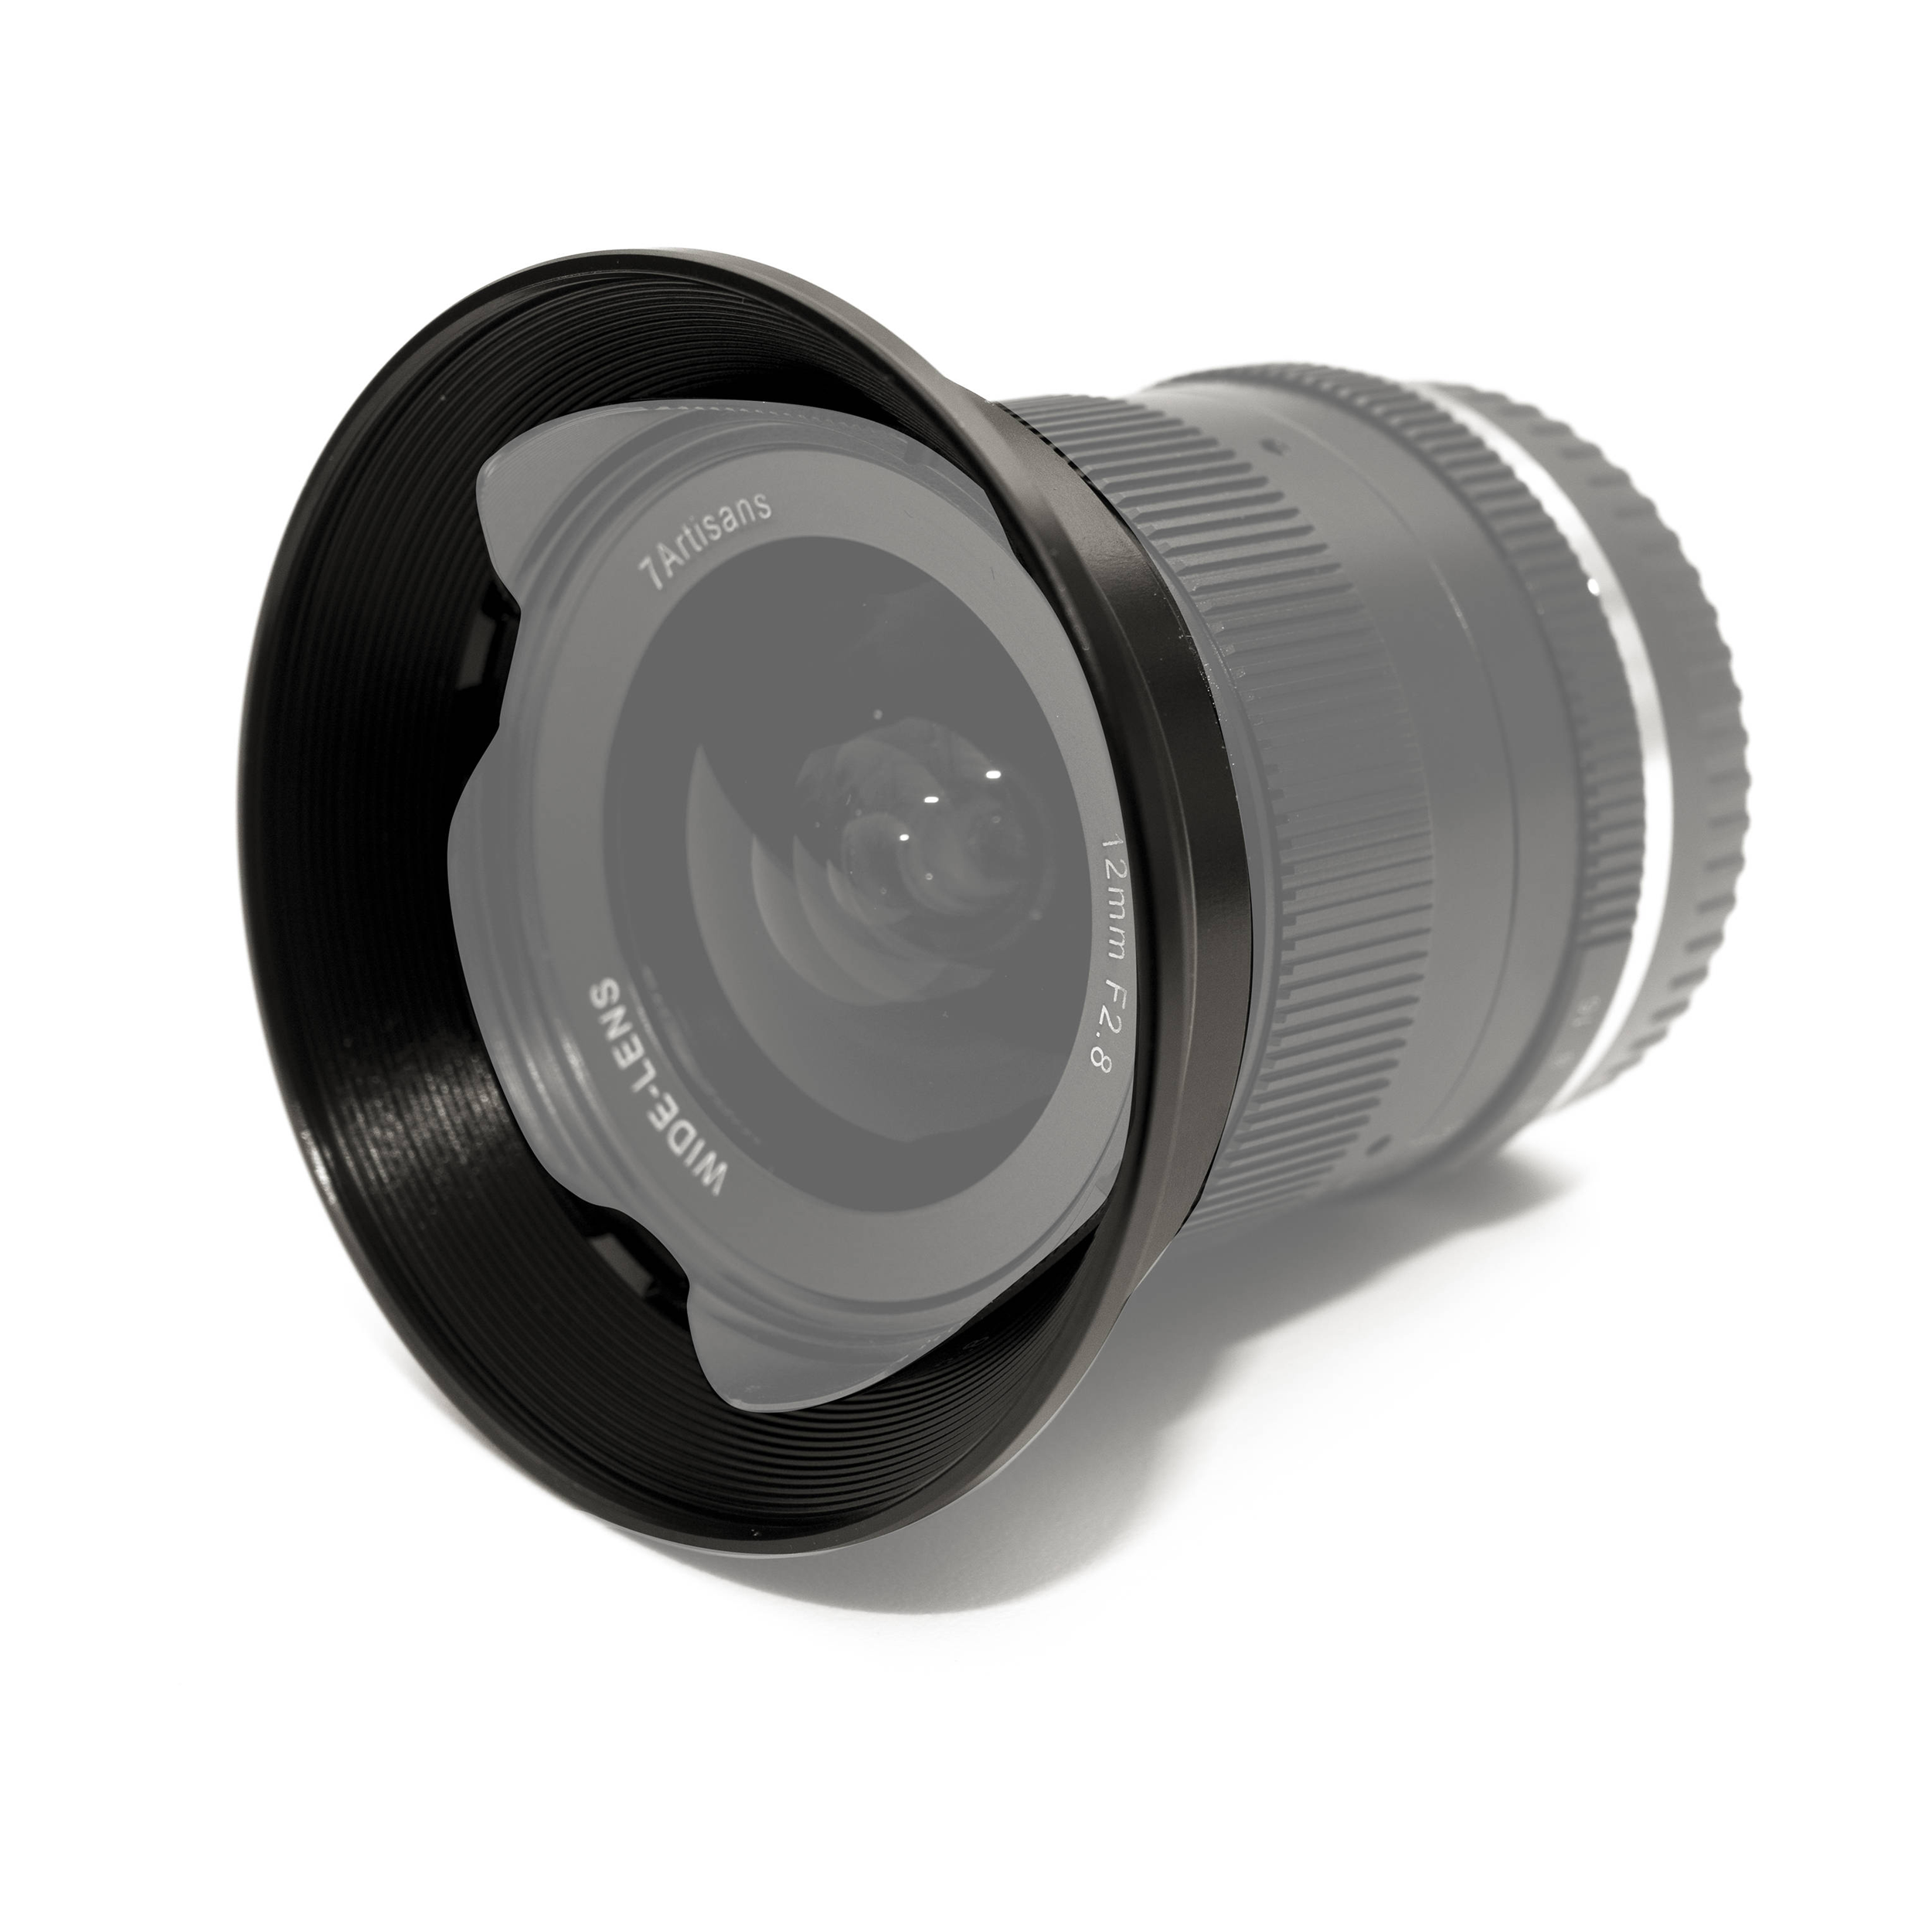 7artisans Photoelectric Filter Adapter for 7artisans Photoelectric 12mm f/2.8 Lenses